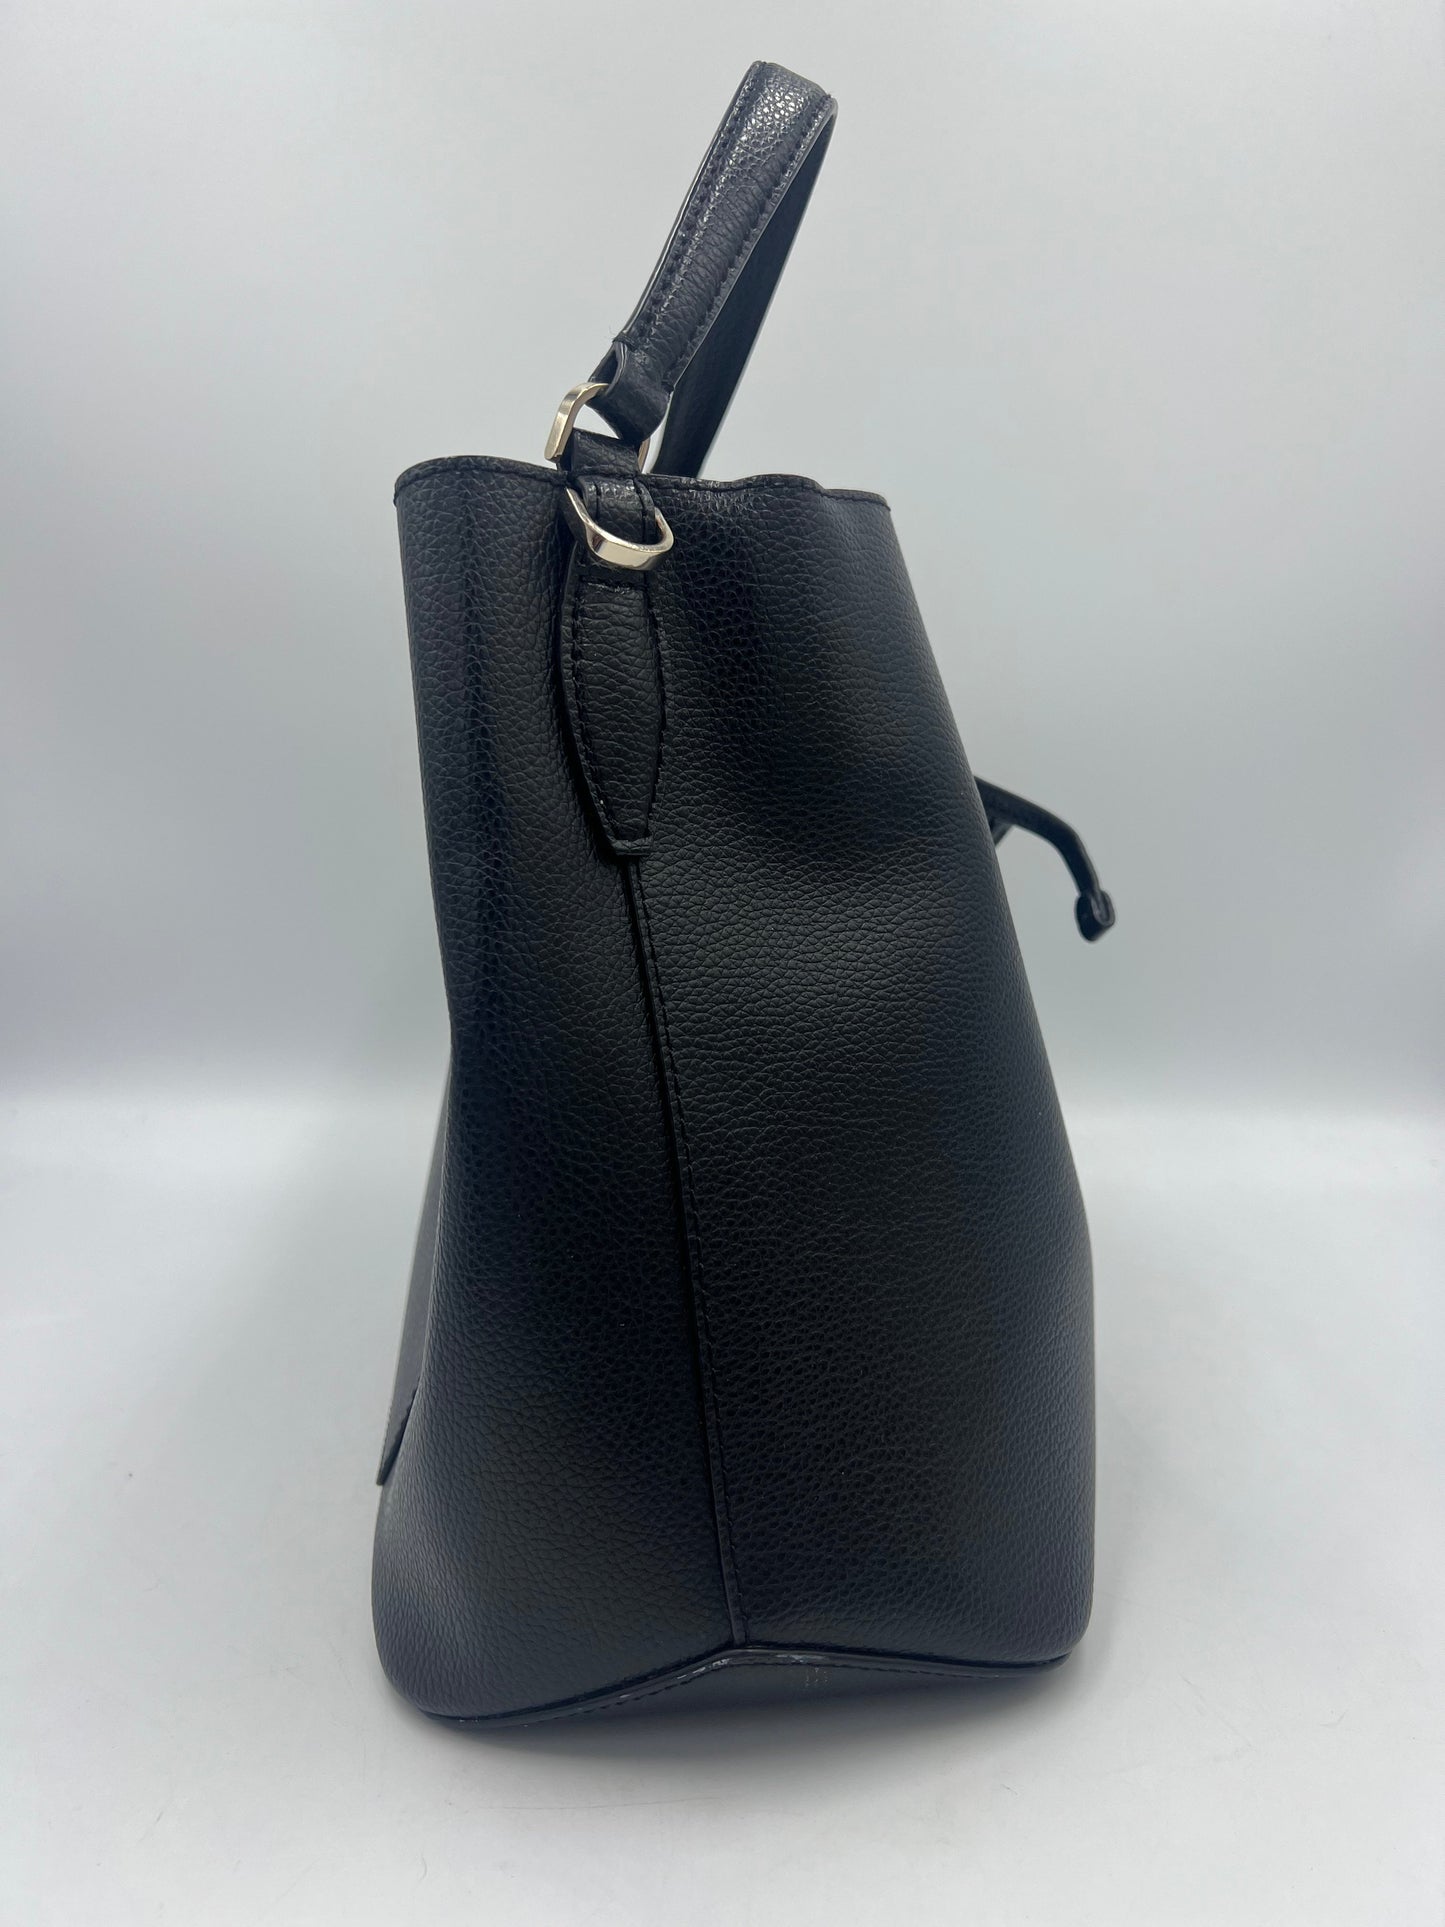 Kate Spade Leather Bucket Bag